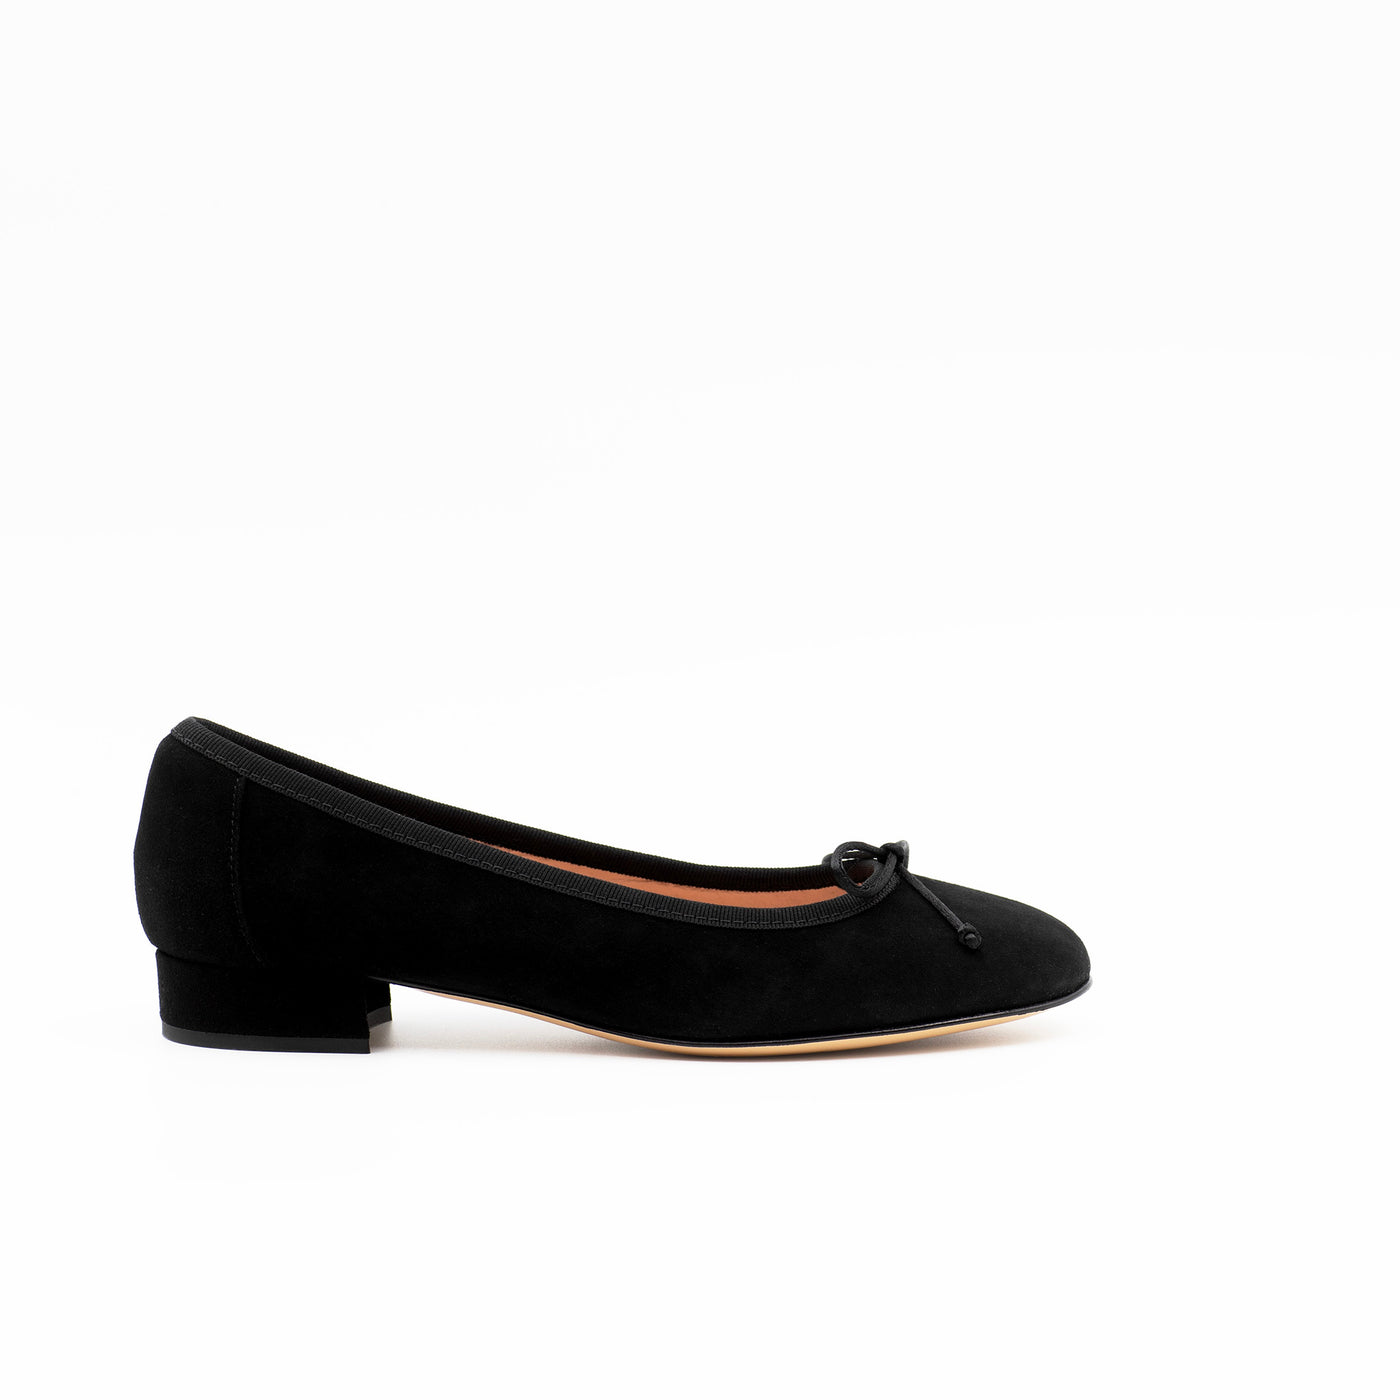 Heeled ballerina shoe in black suede leather